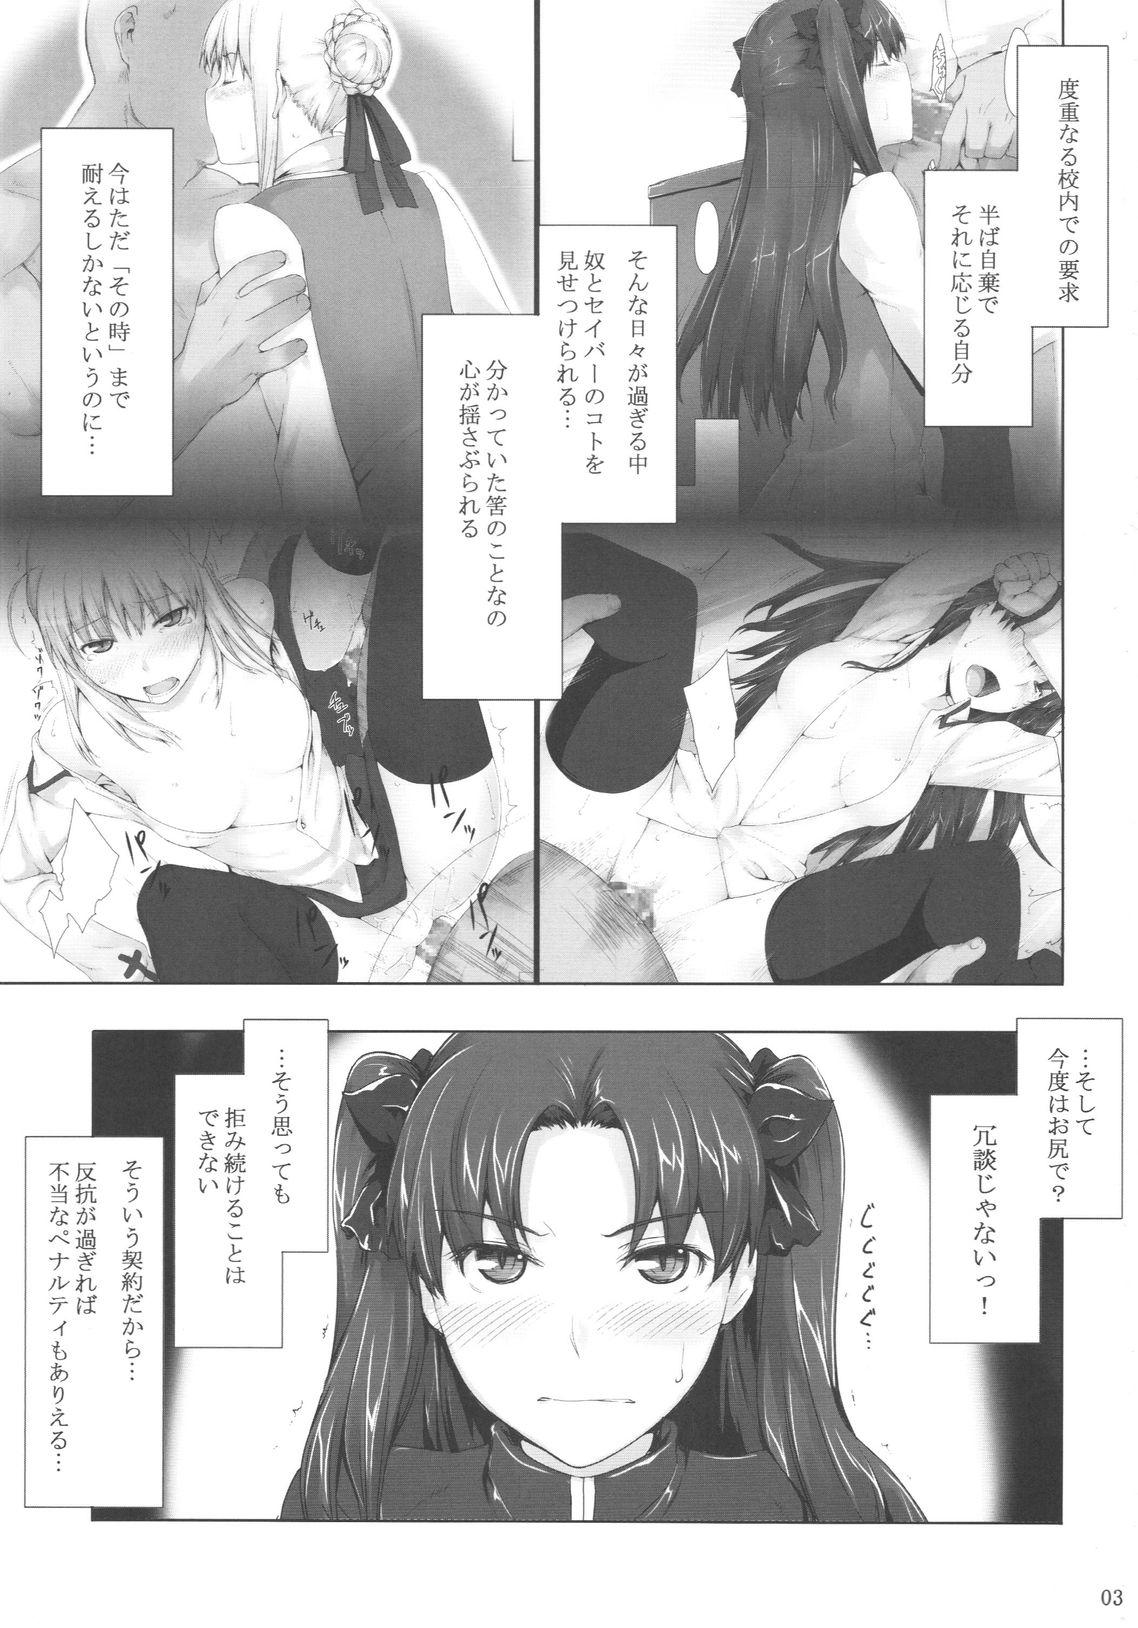 Urine Tohsaka-ke no Kakei Jijou 5 - Fate stay night Thylinh - Page 2